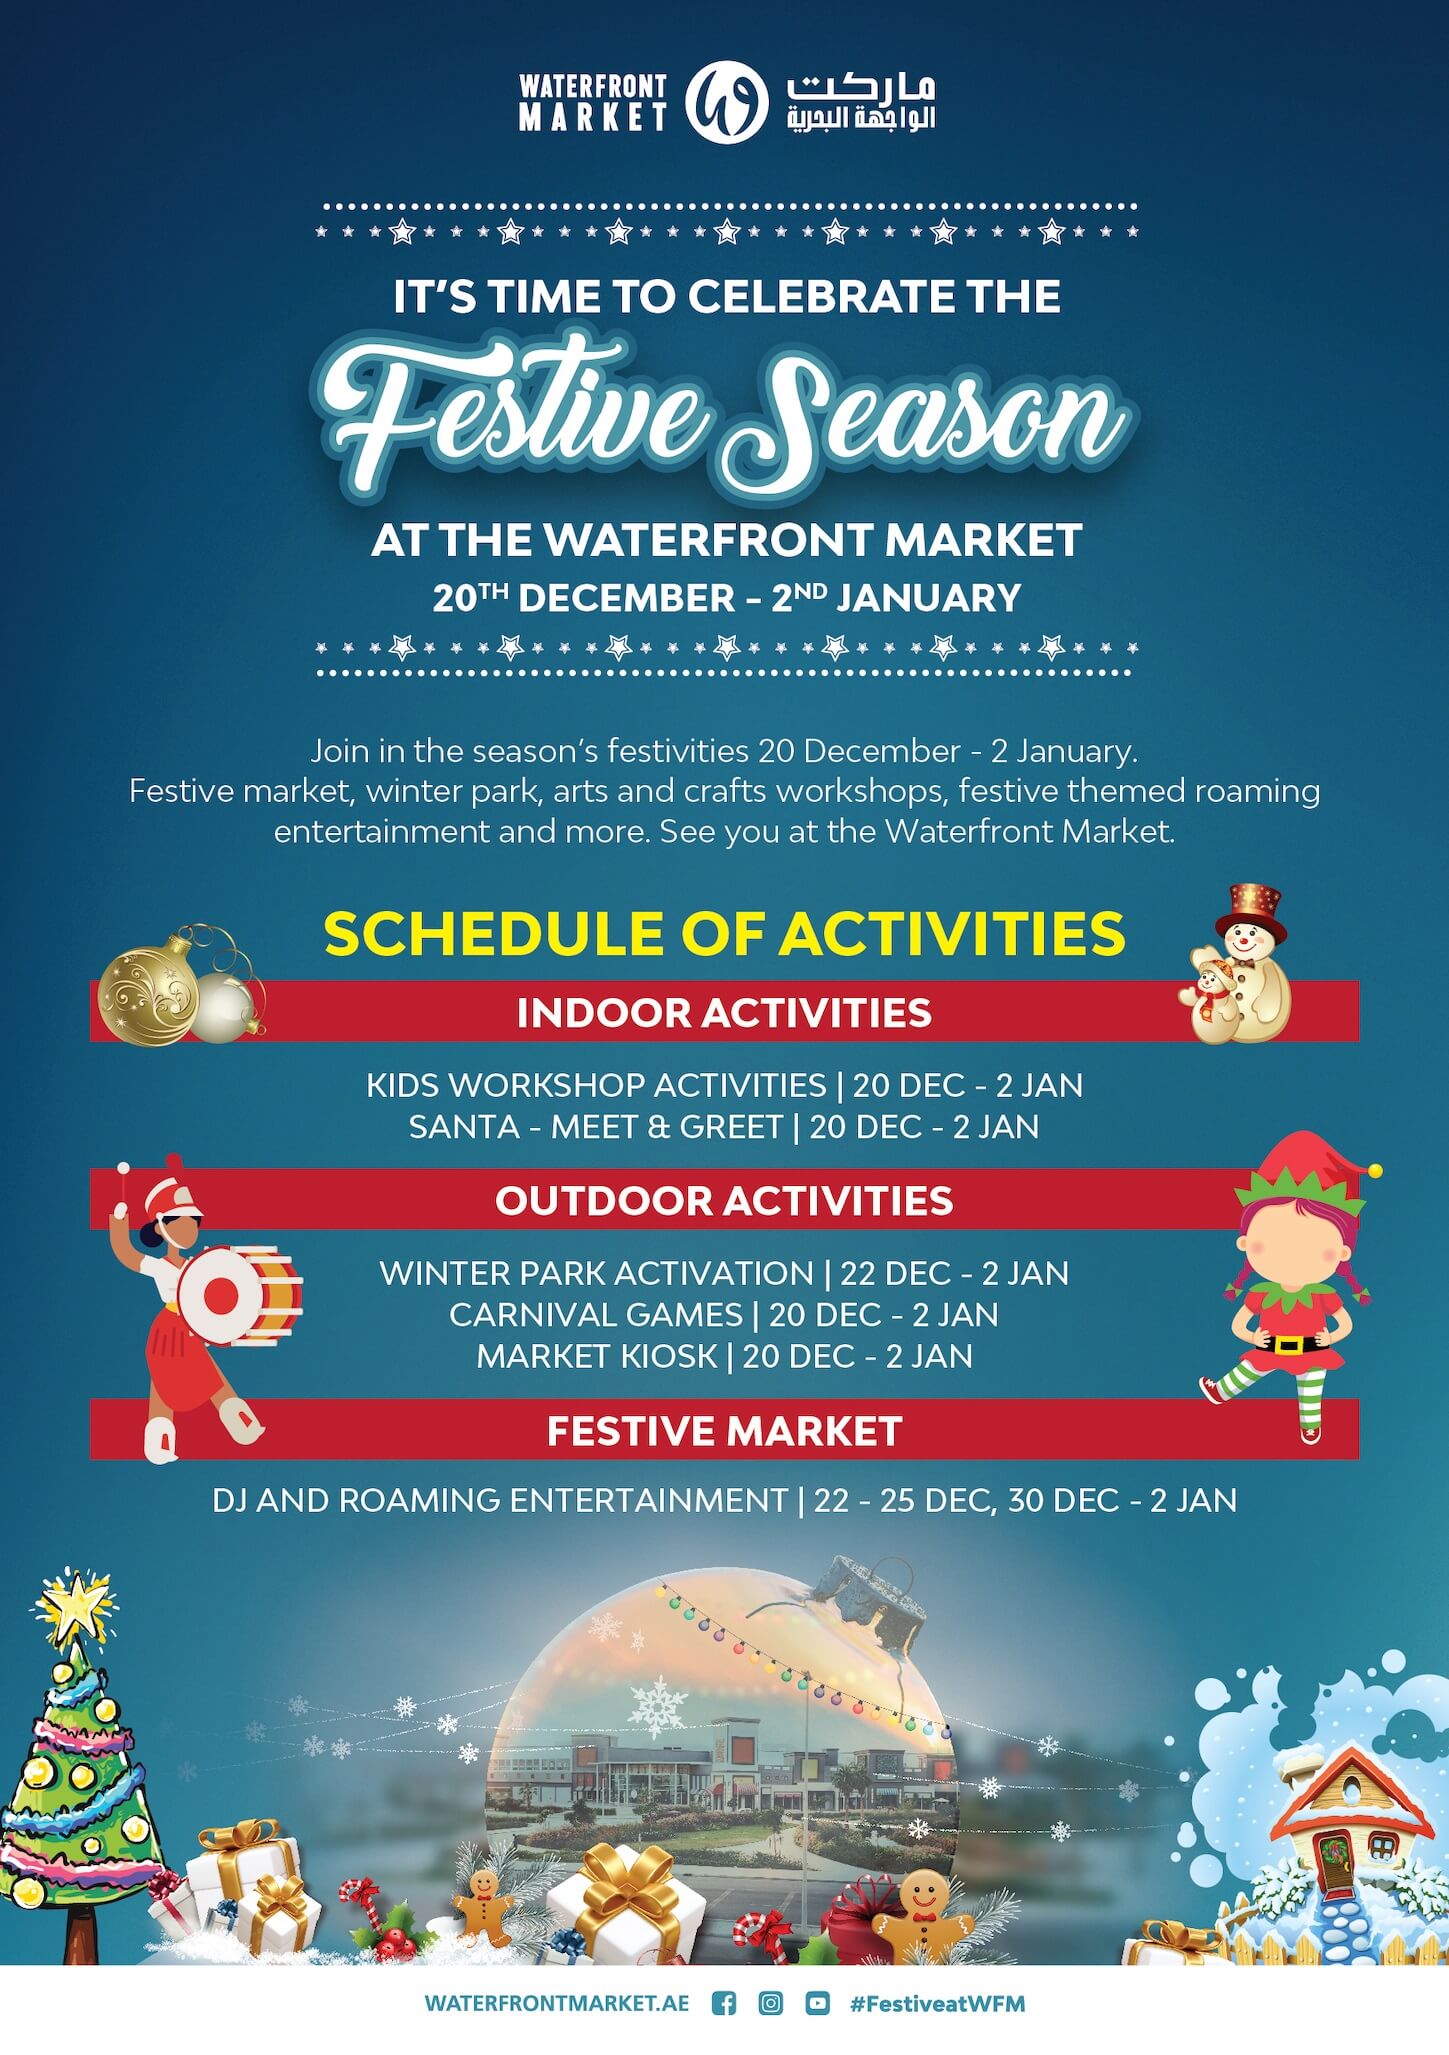 Festive season at the Waterfront Market